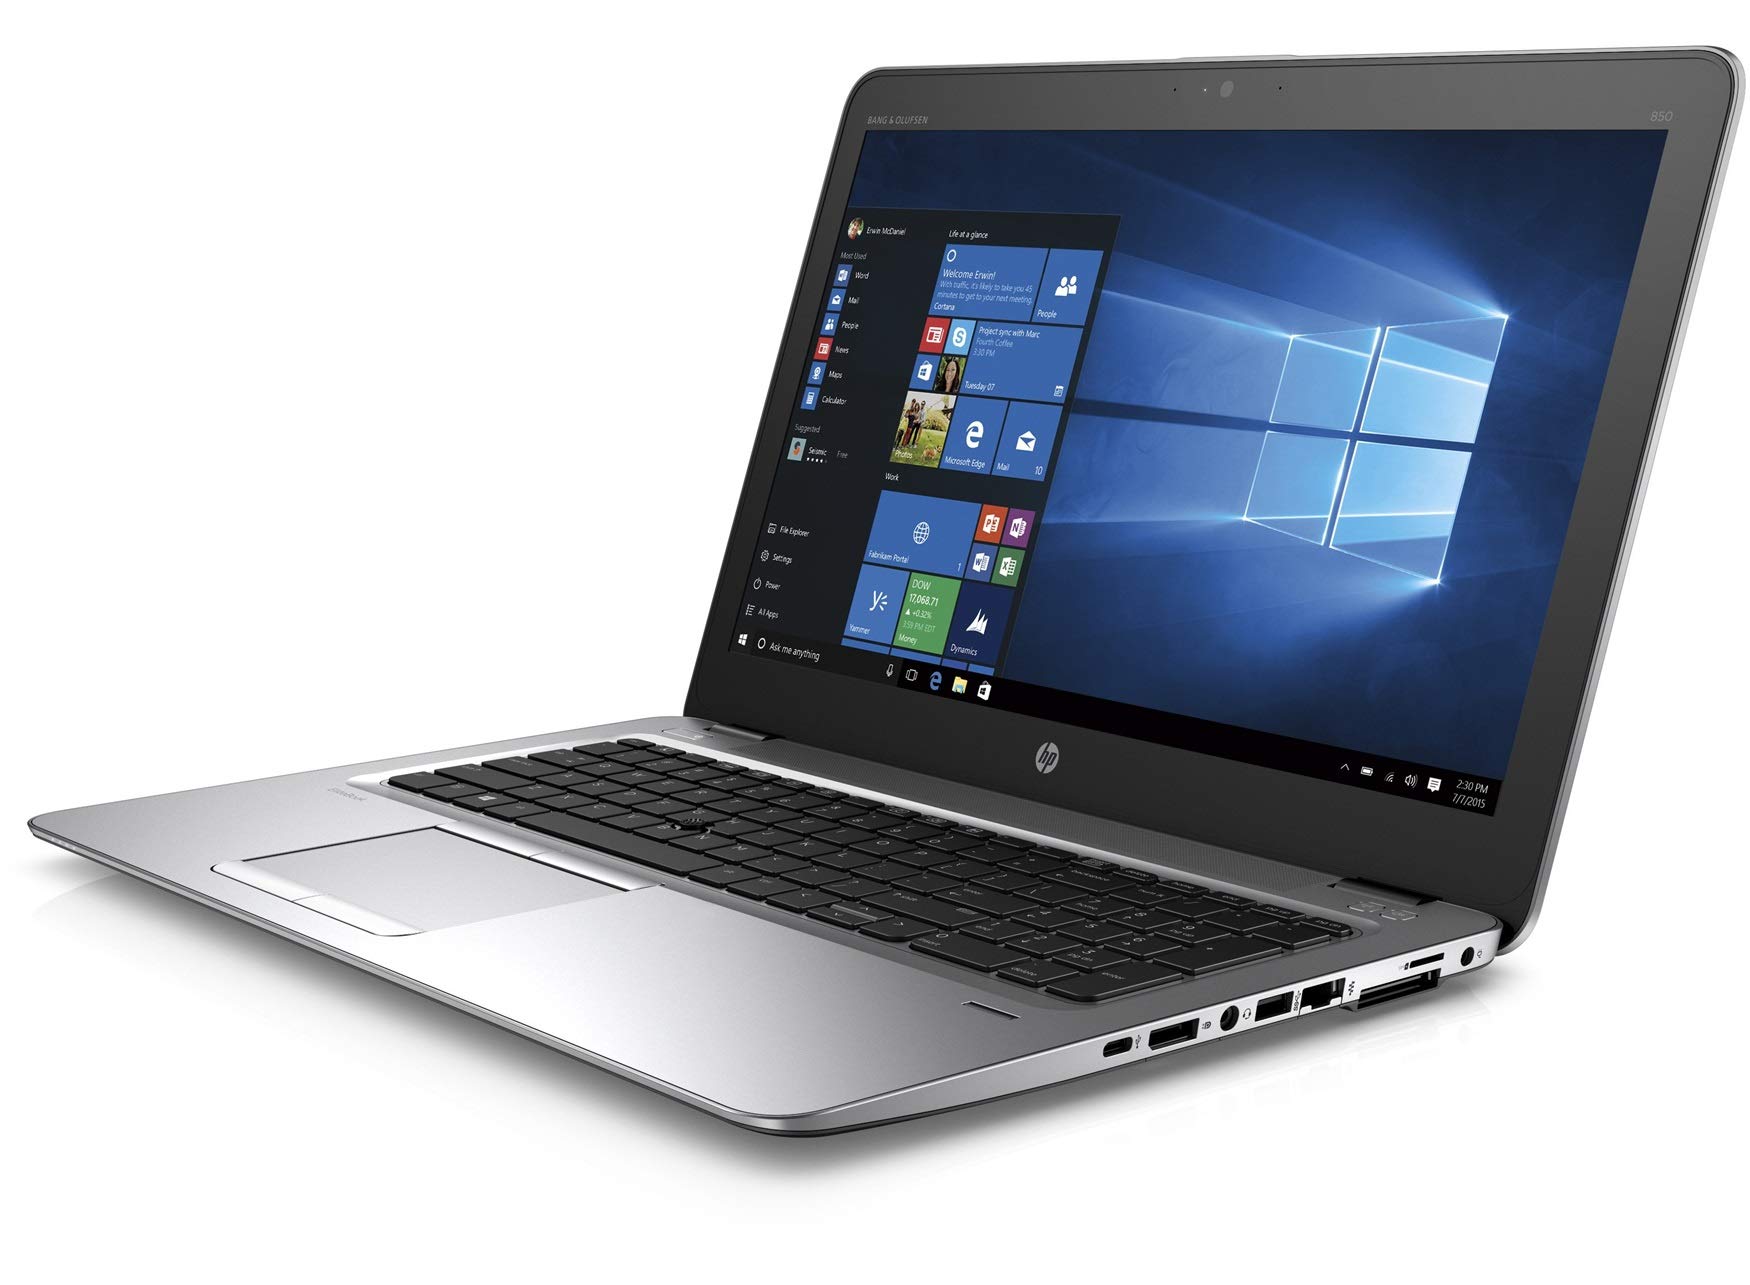 HP Elitebook 850 G3 15.6" Laptop Computer, Intel Core i5-6300U, 16GB DDR4 RAM, 512GB SSD, Backlit Keyboard, Fingerprint, Windows 10 Pro (Renewed)